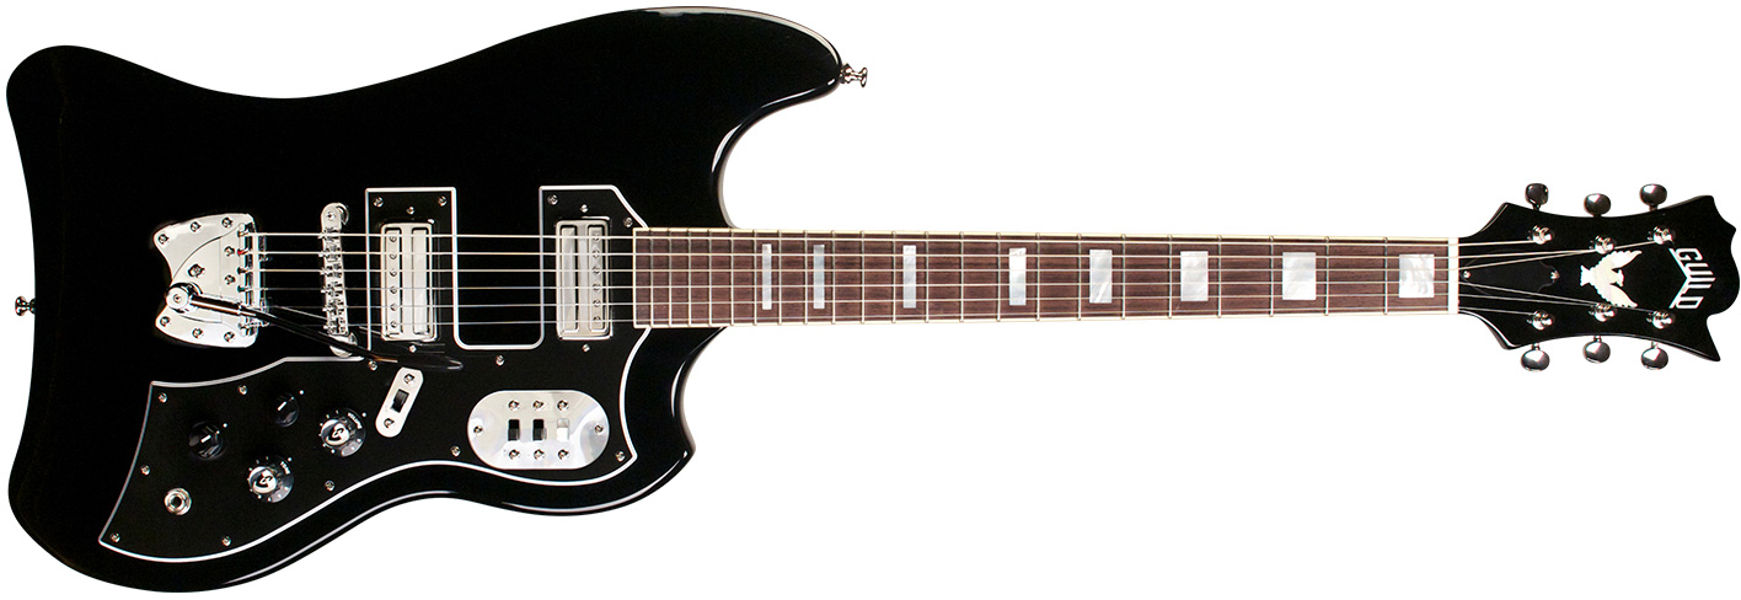 Guild S-200 T-bird - Noir - Retro rock electric guitar - Variation 1